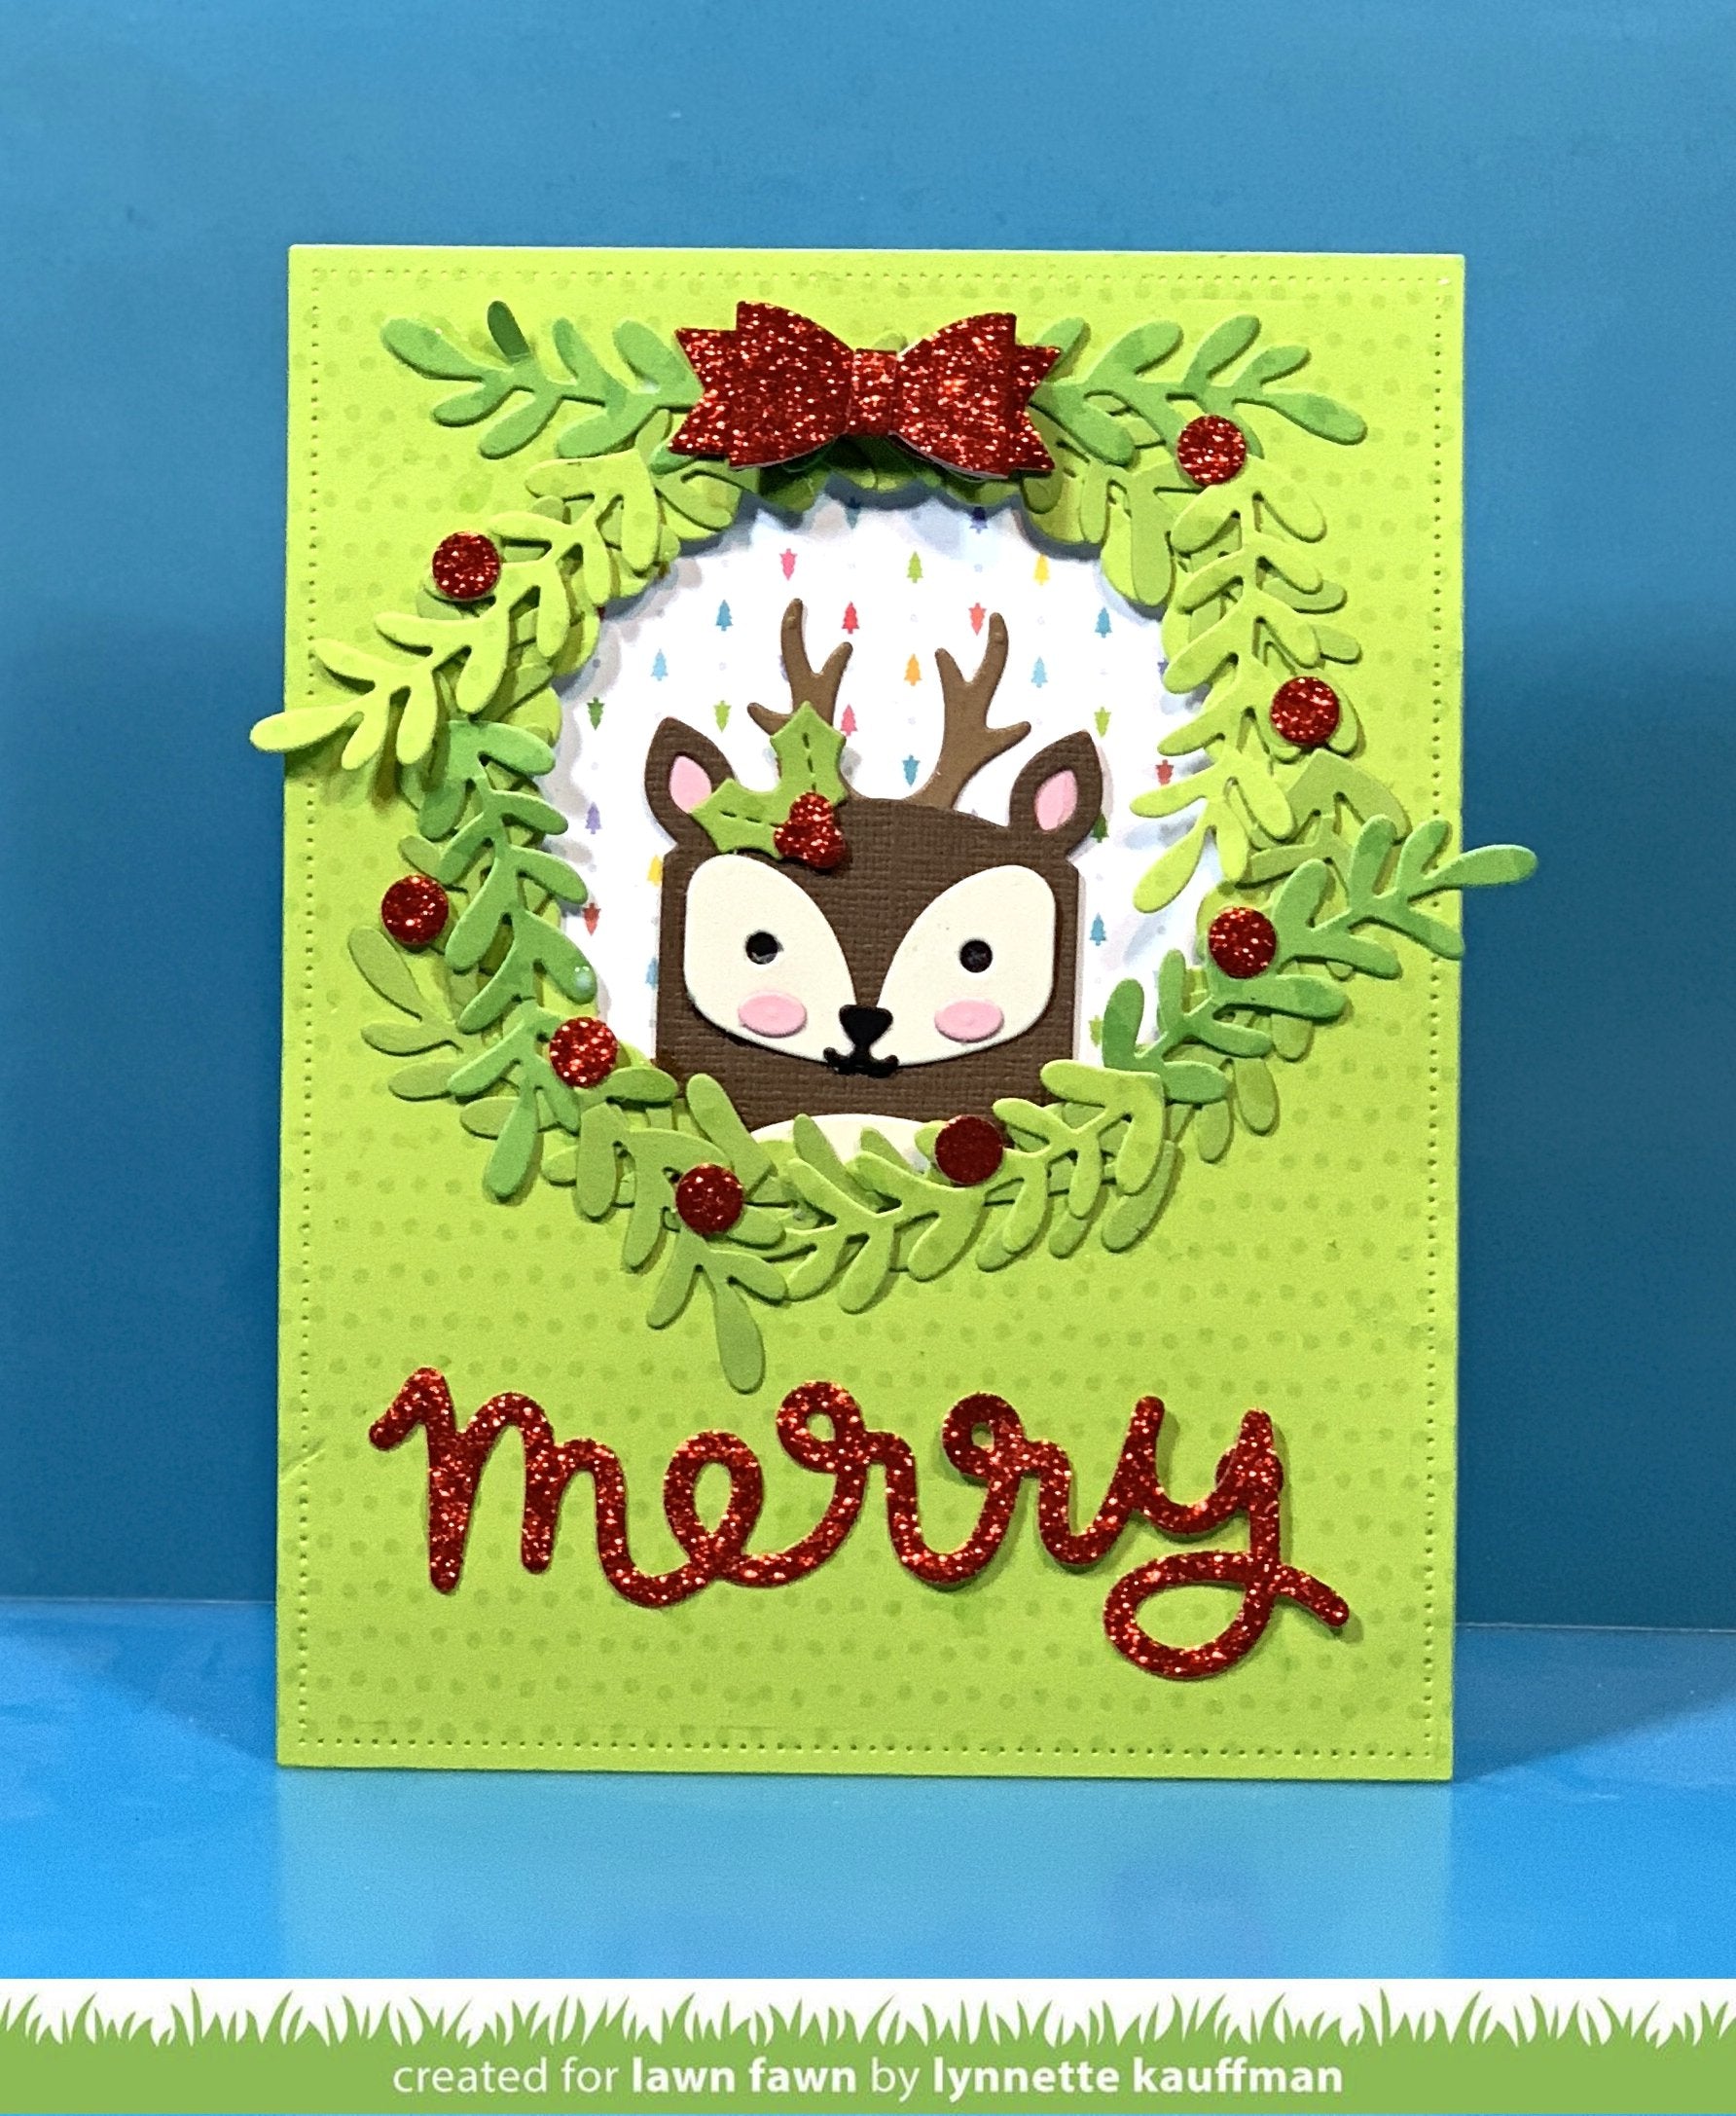 tiny gift box deer add-on